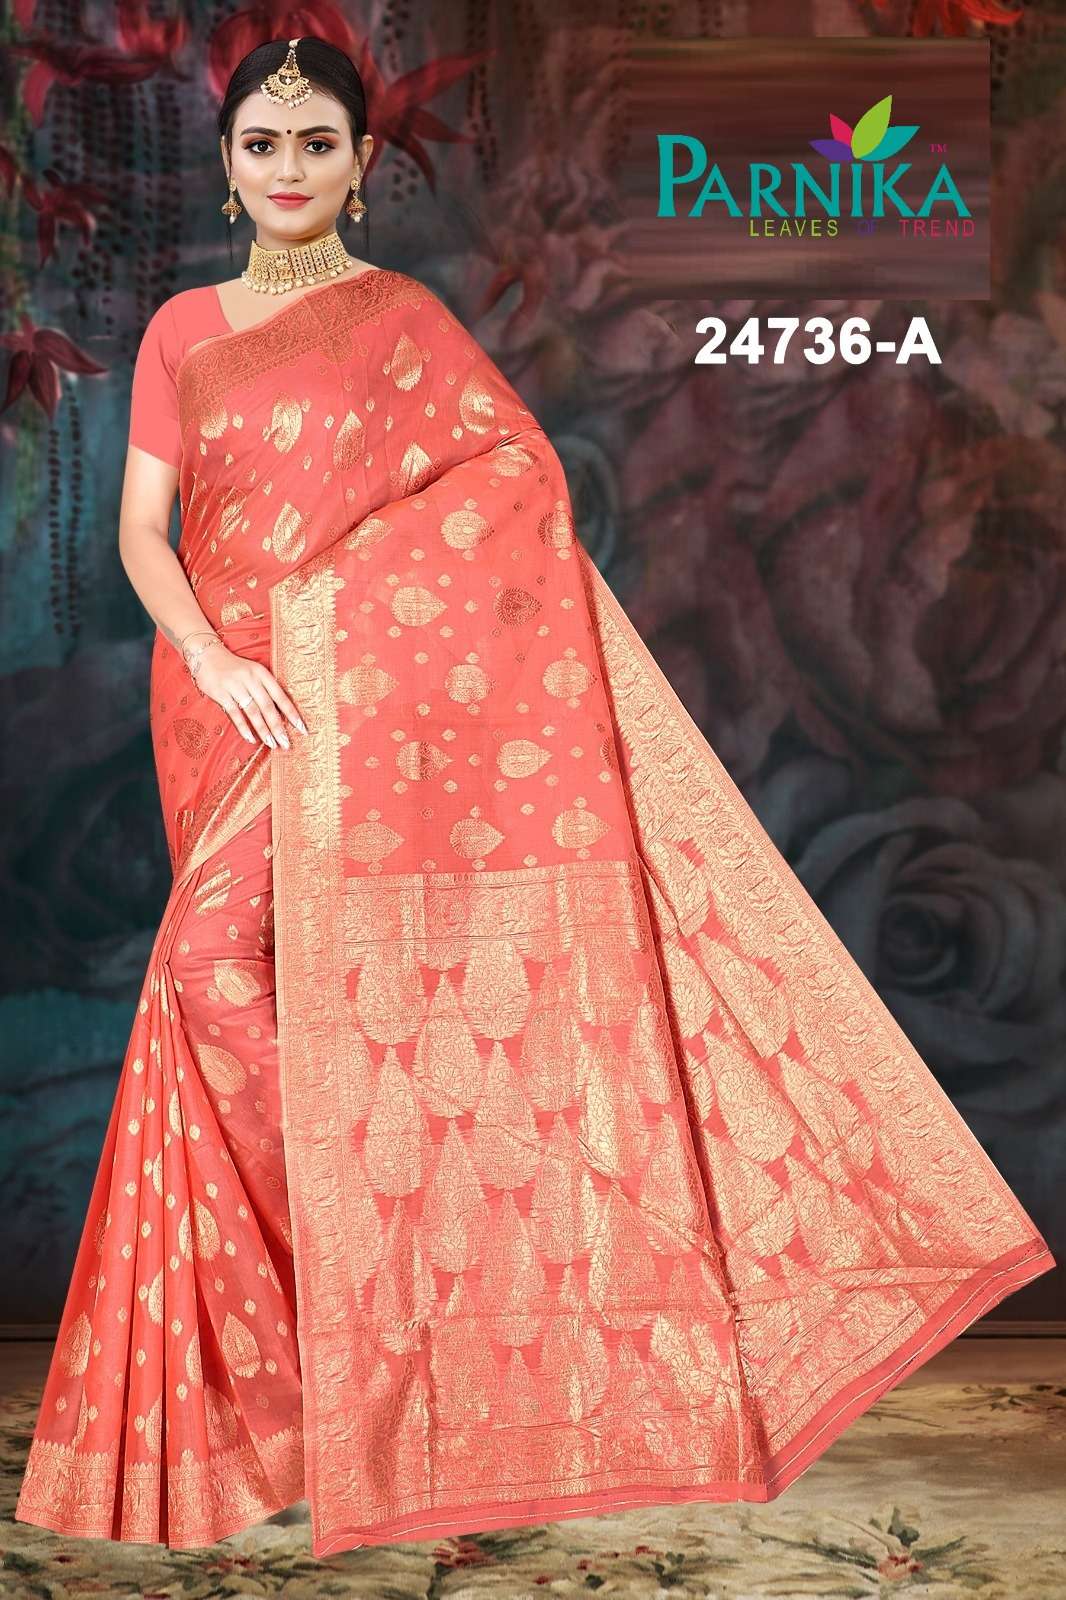 Parnika India Cotton Spun Sarees Festive Wear Wedding Ready to Wear Saree in Wholesale rate - 24736